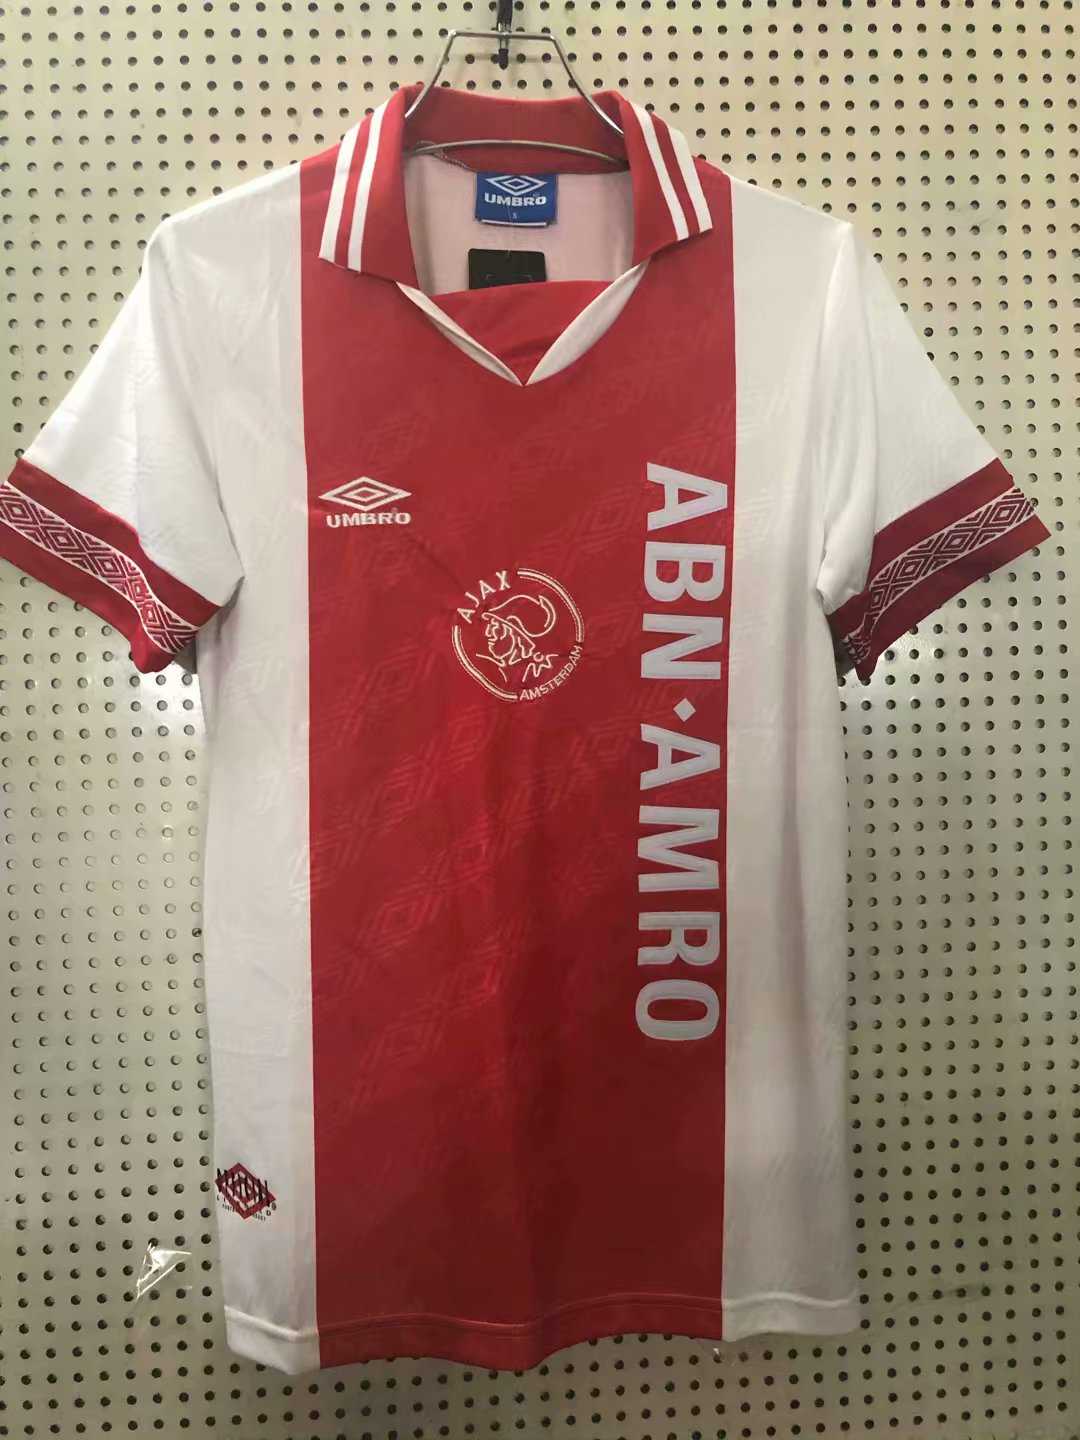 1994-1995 Ajax Retro Home Red & White Men Soccer Jersey Shirt